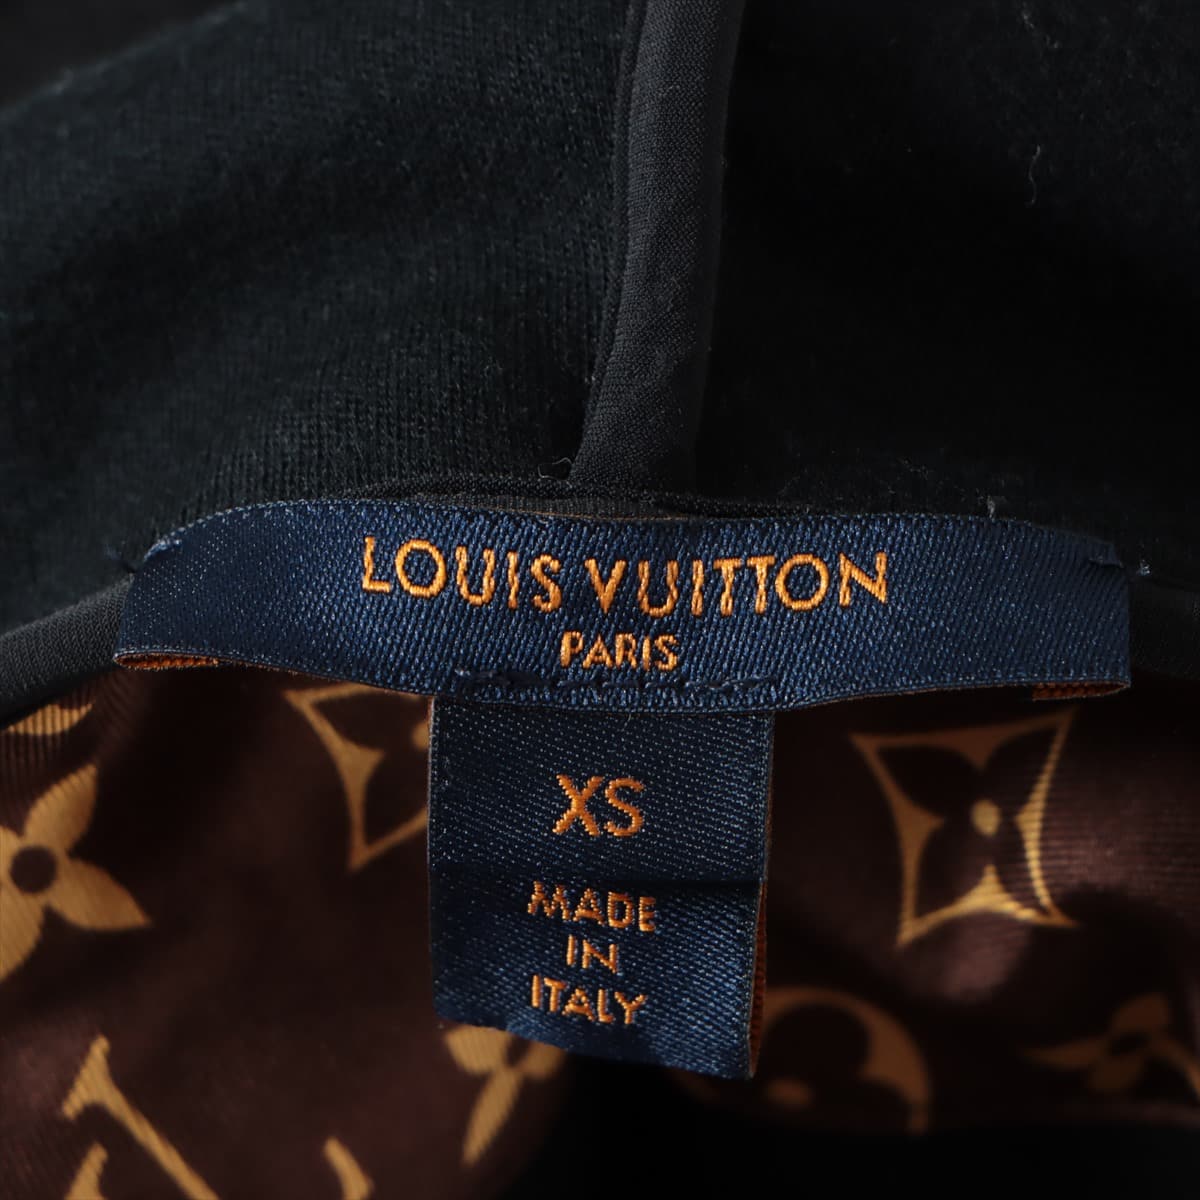 Louis Vuitton RW201W Cotton & nylon Parker XS Ladies' Black  printed hoodie 1A61LL